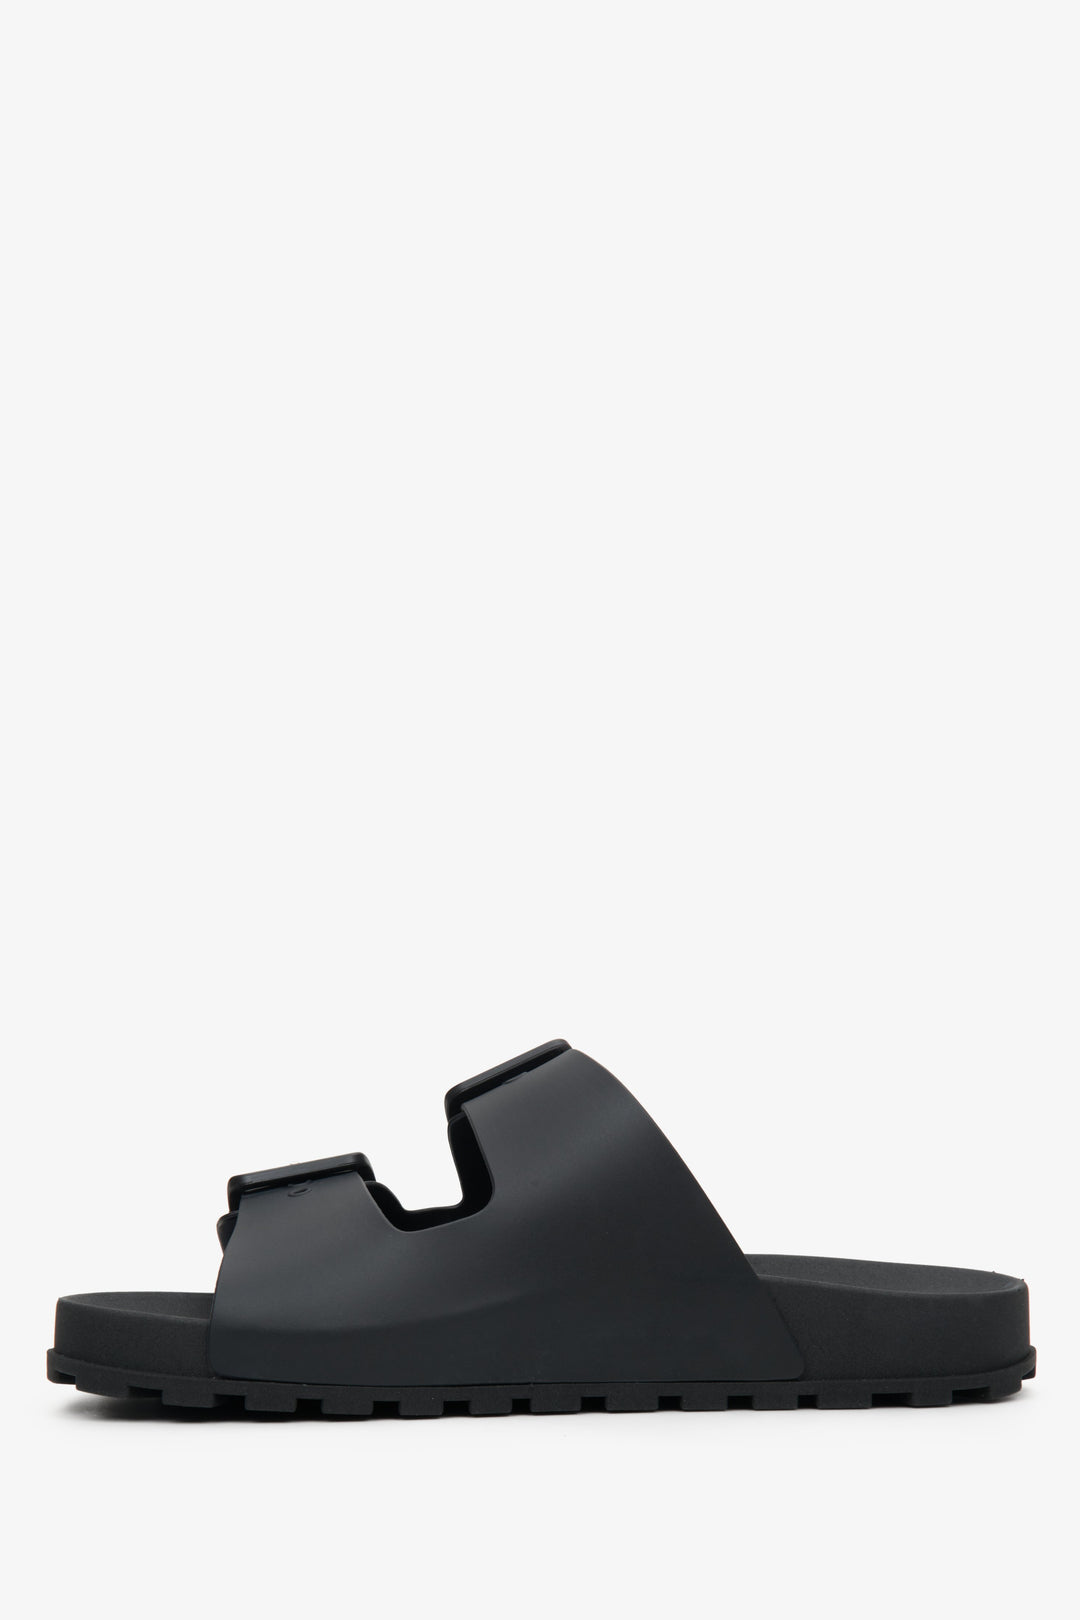 Rubber, women's black flip-flops by Estro - shoe profile.